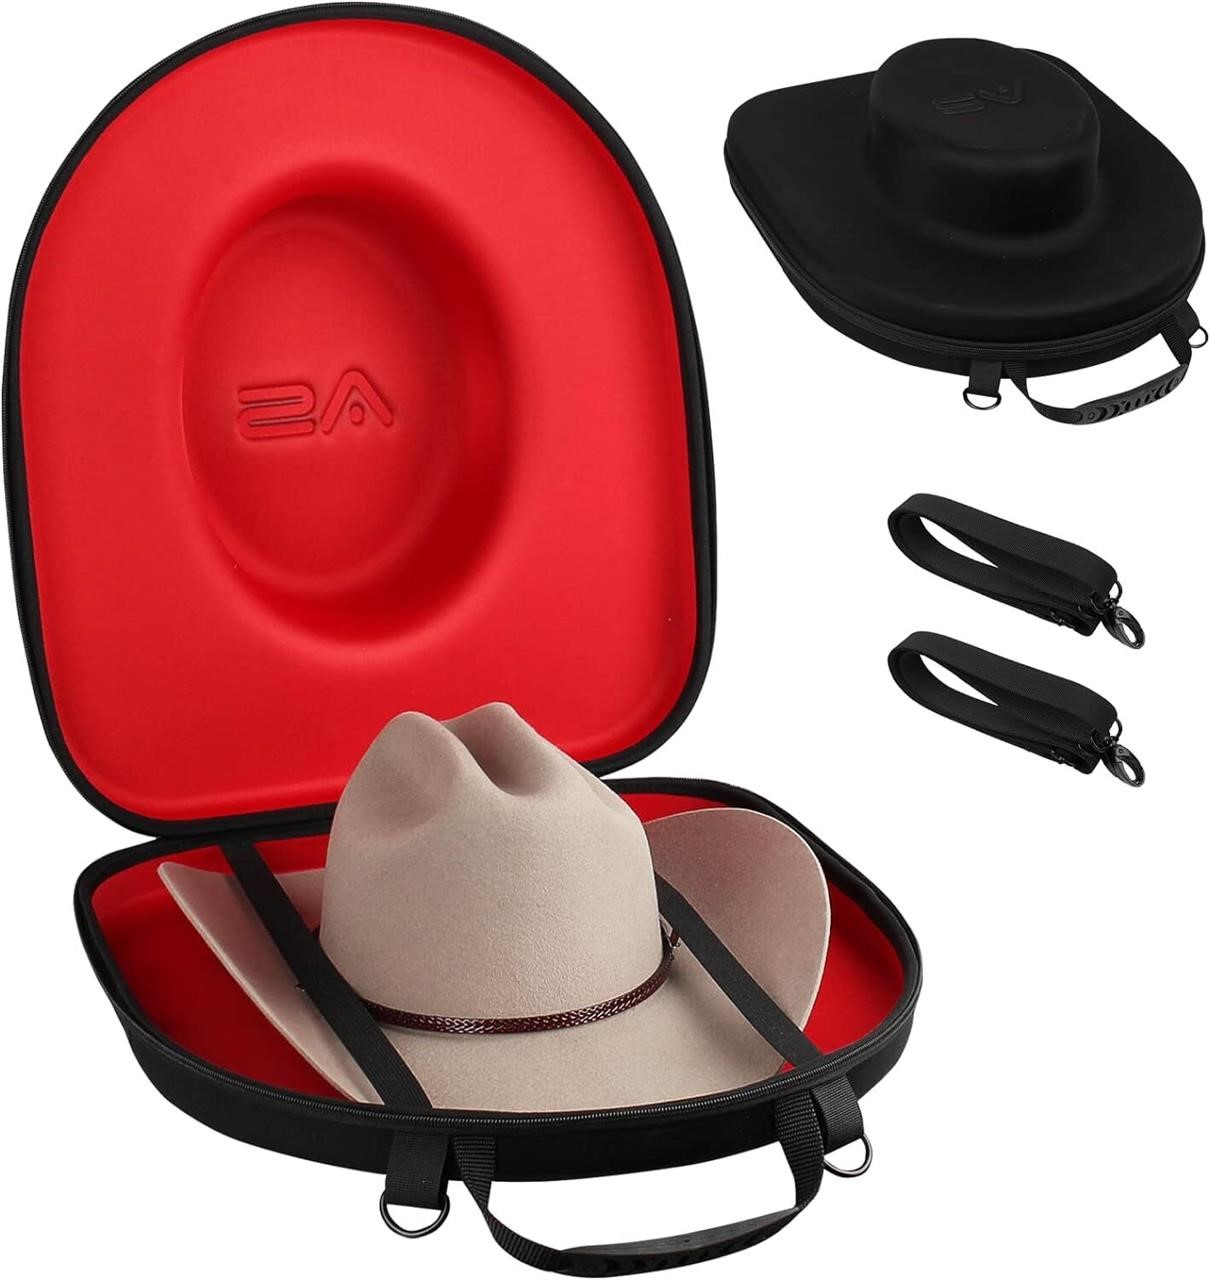 Travel Case for Cowboy Hats - Black Red  Large